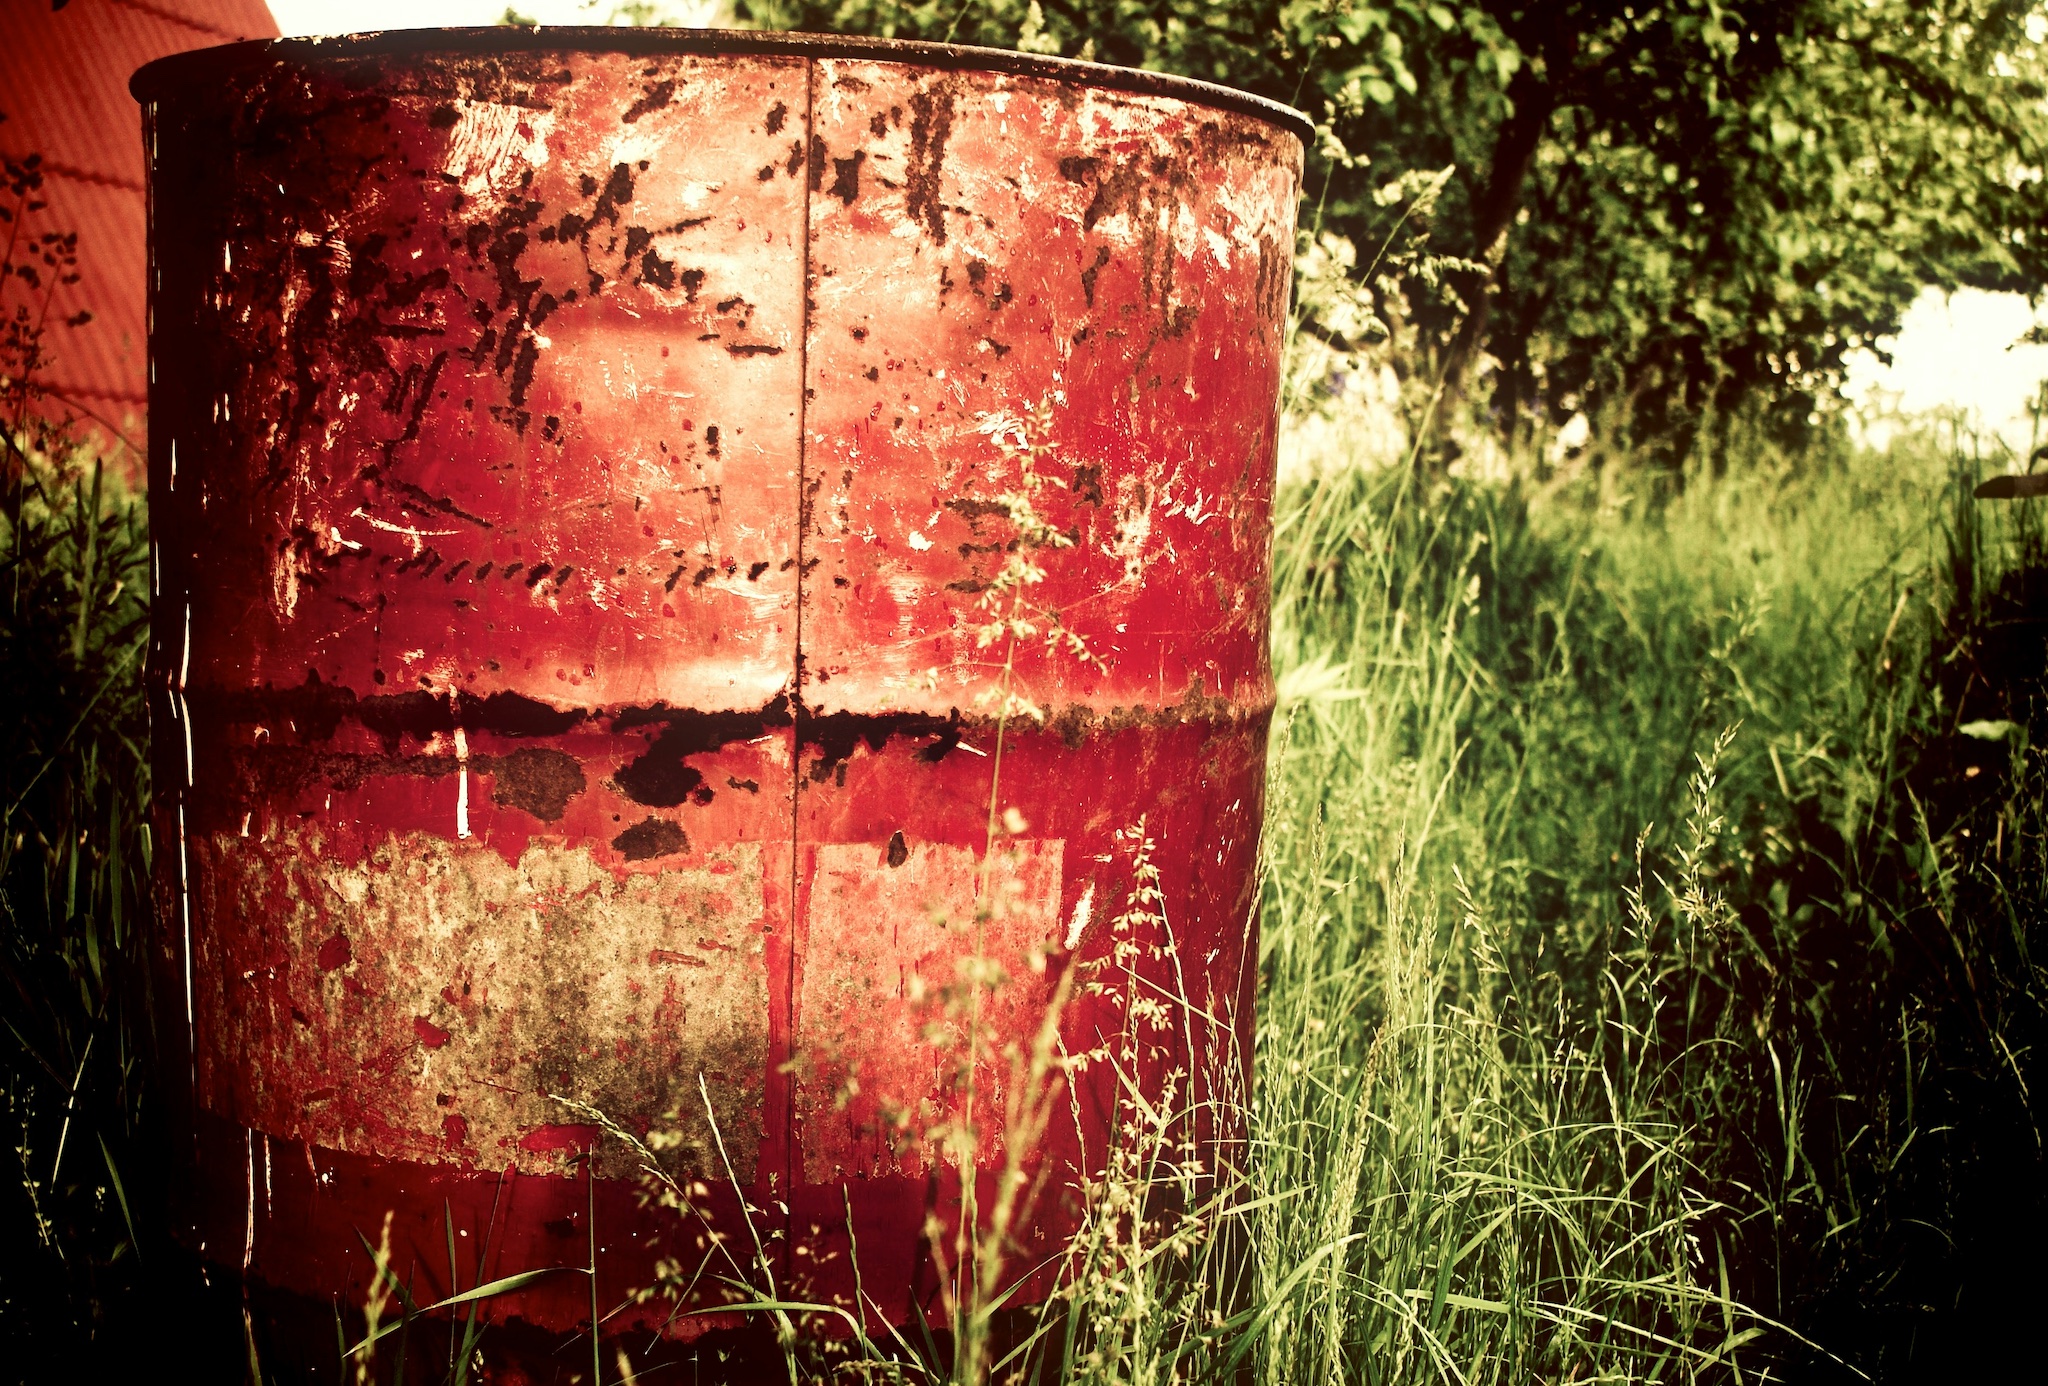 Rusted barrel on grass field; image by Aleks Dorohovich, via Unsplash.com.